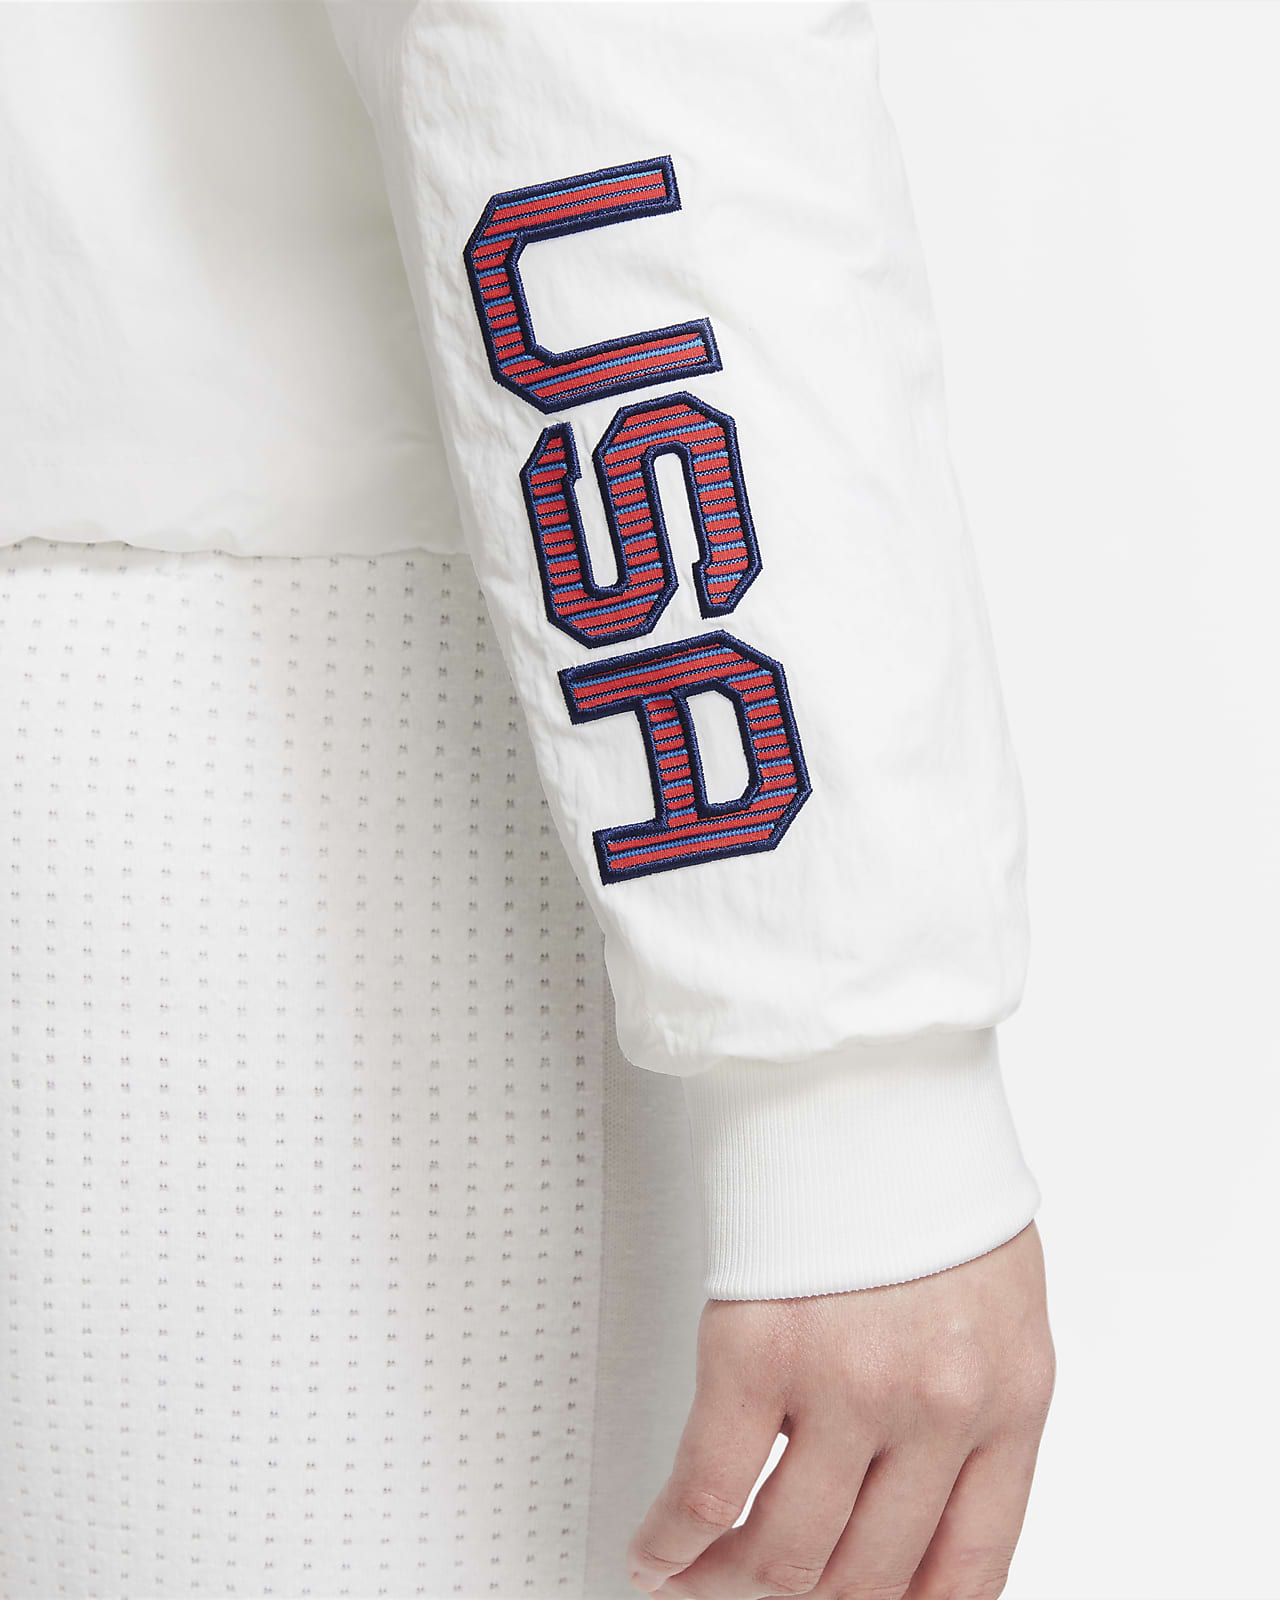 USA Women's Medal Stand Jacket. Nike.com